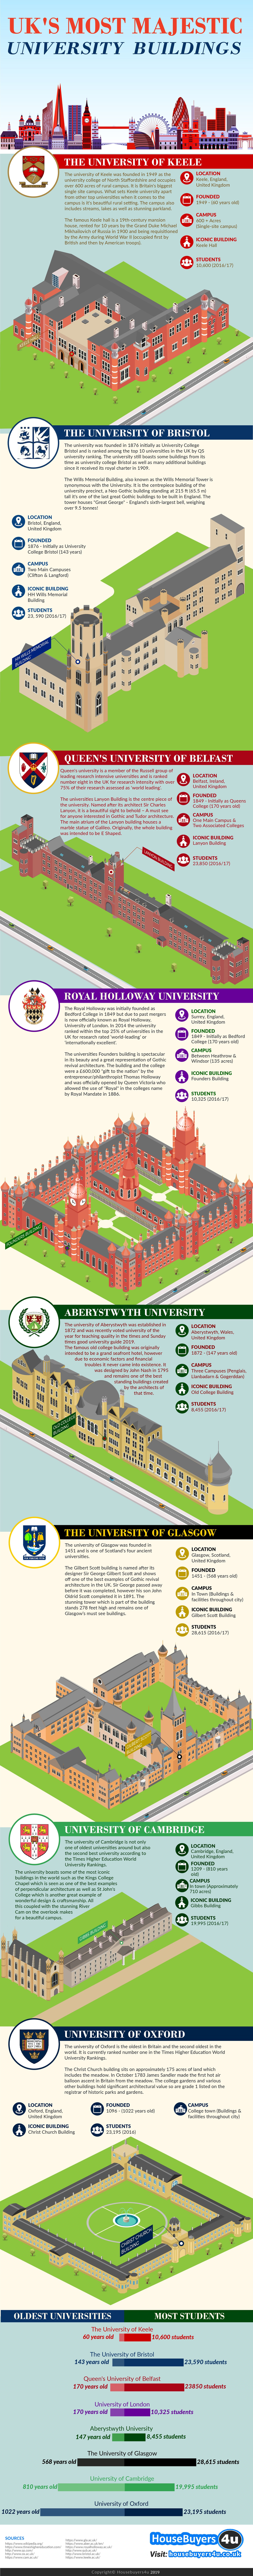 UK's Most Majestic University Buildings Revealed